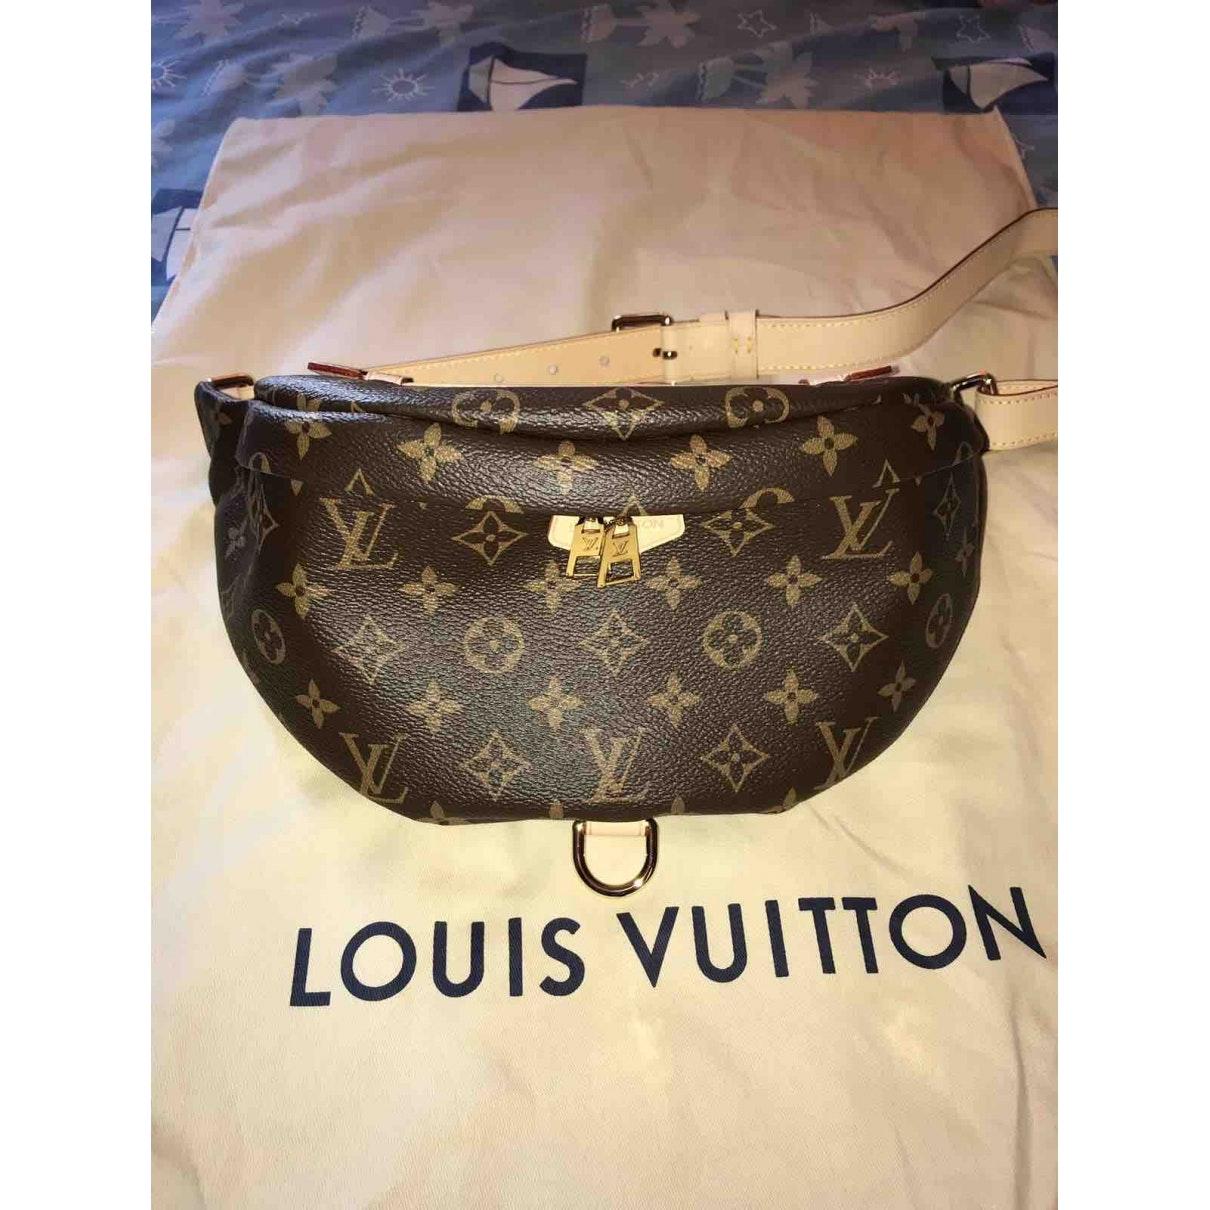 Louis Vuitton Airplane Bag Name Change